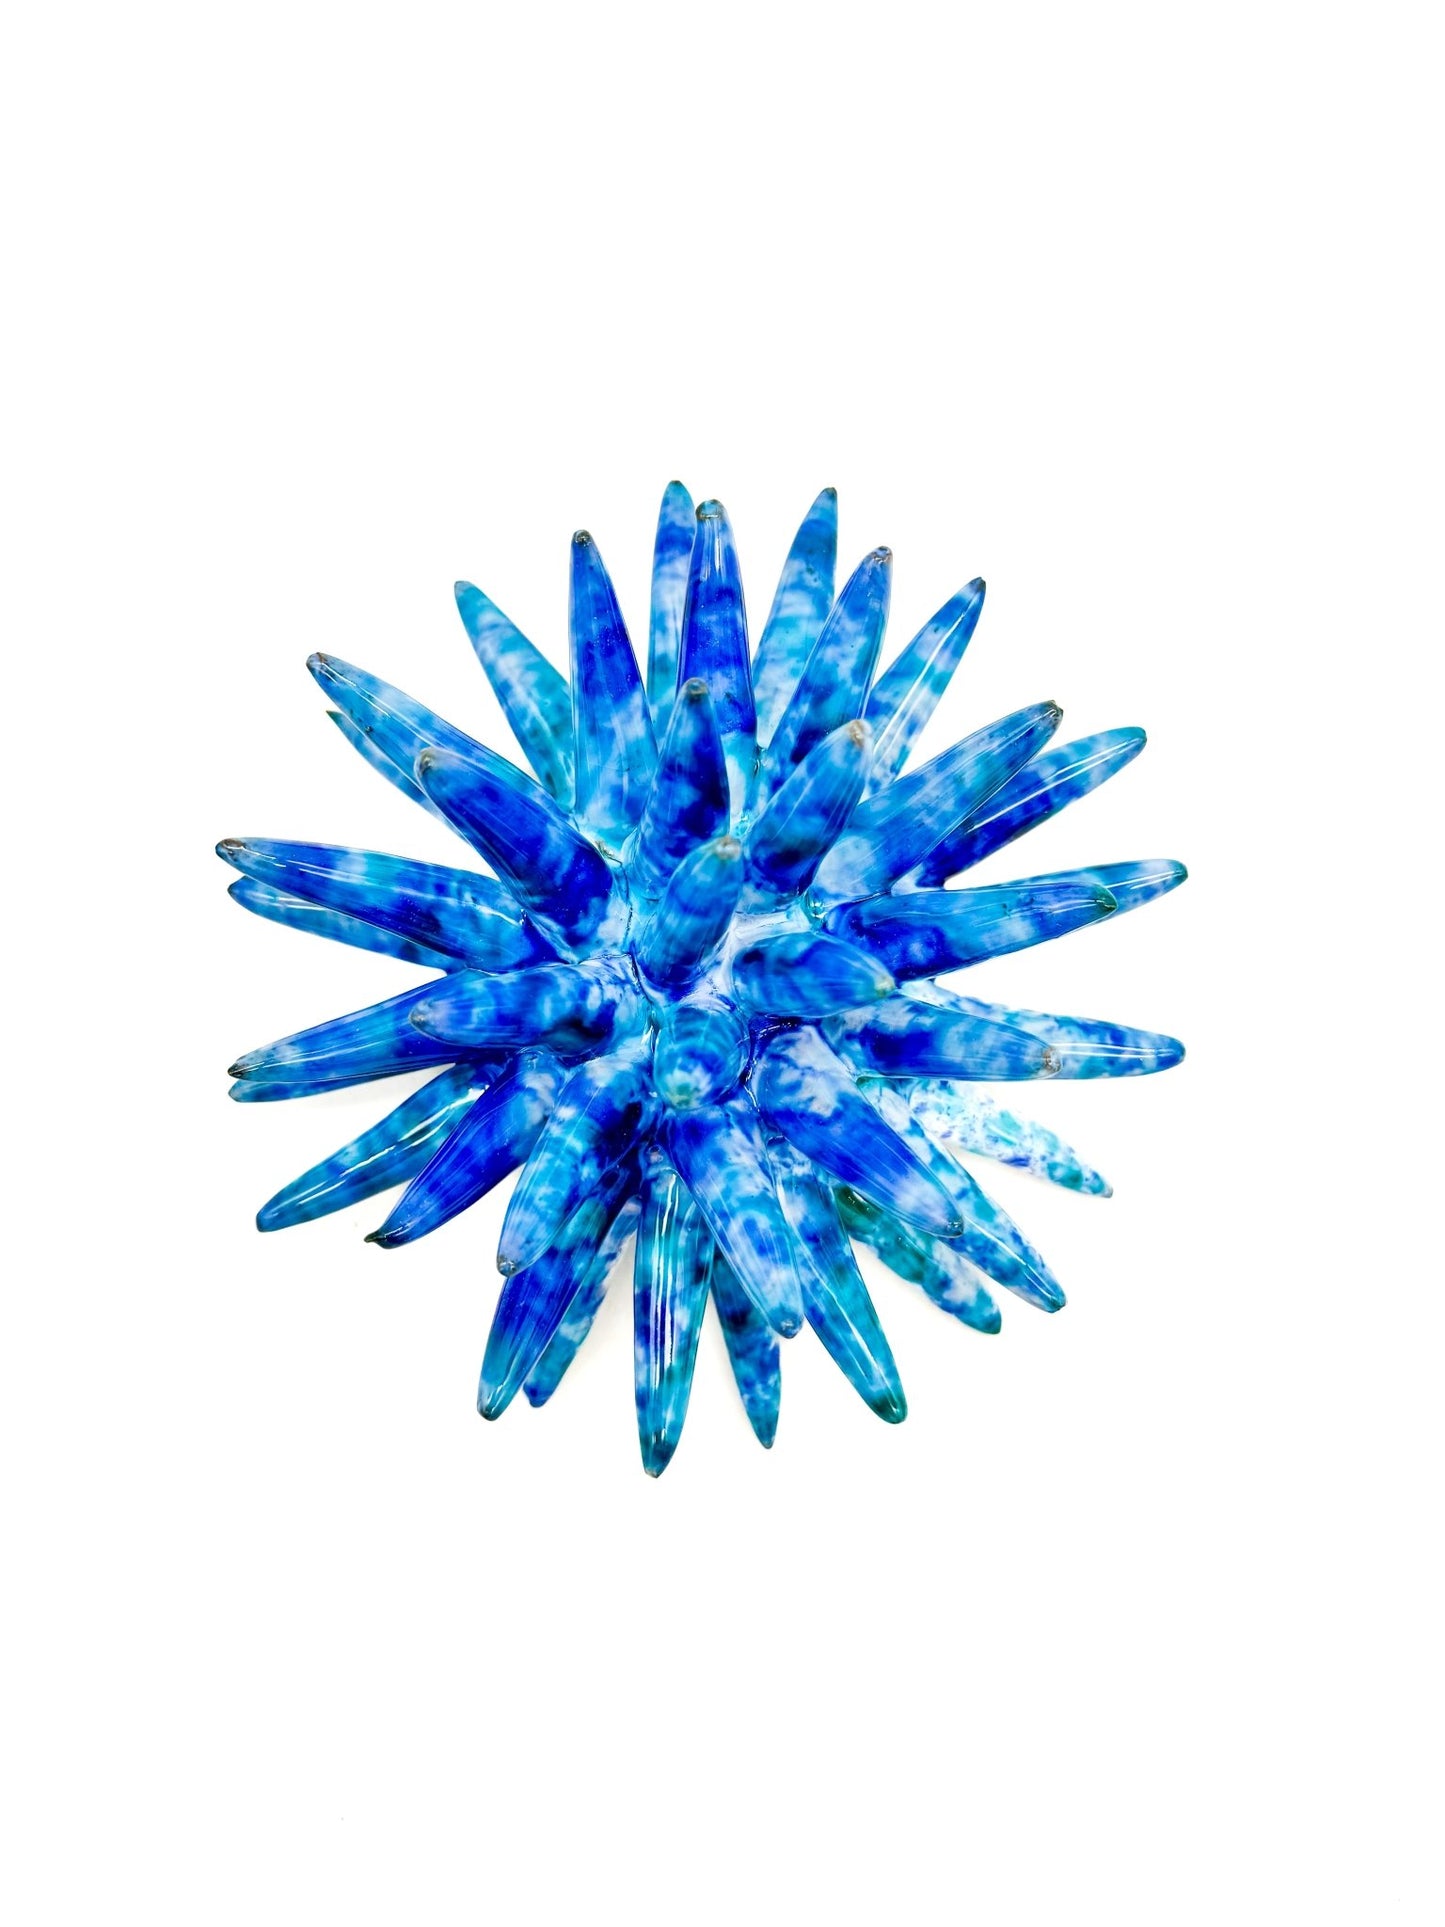 Erizo de mar de cerámica mediano Azul2 - moruecoceramicas